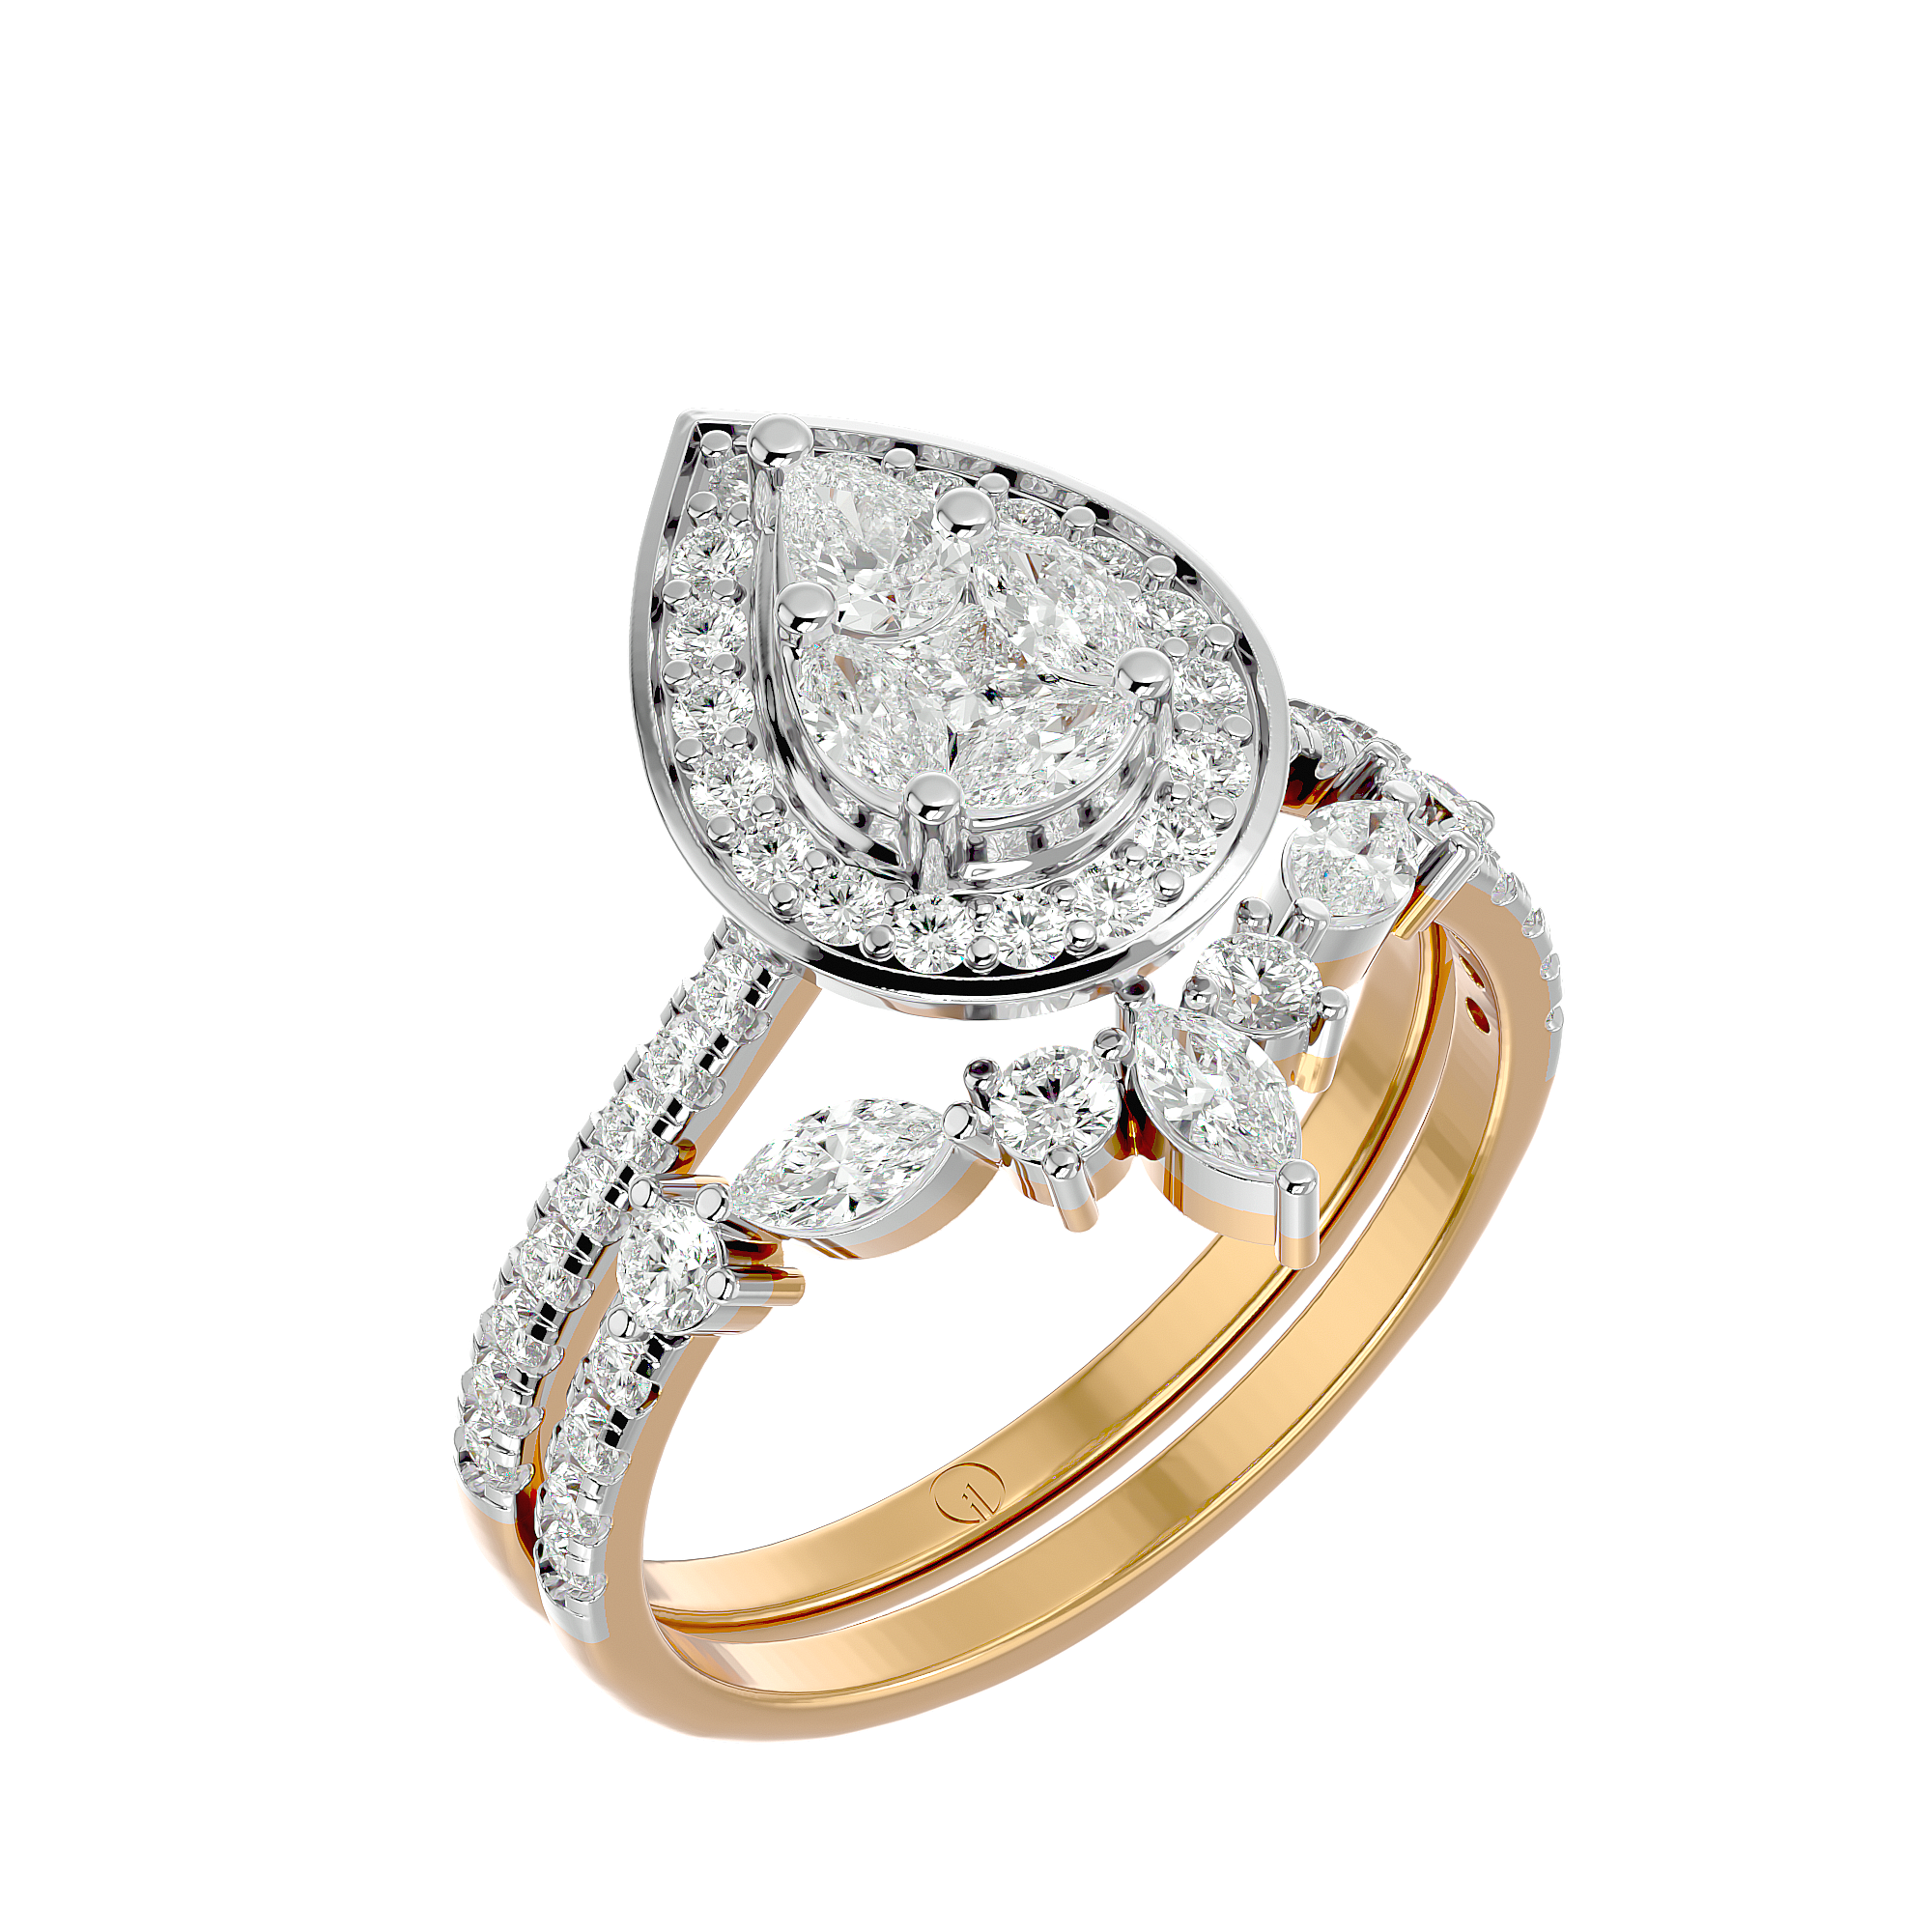 Precious Petals Solitaire Illusion Diamond Ring made from VVS EF diamond quality with 1 carat diamonds